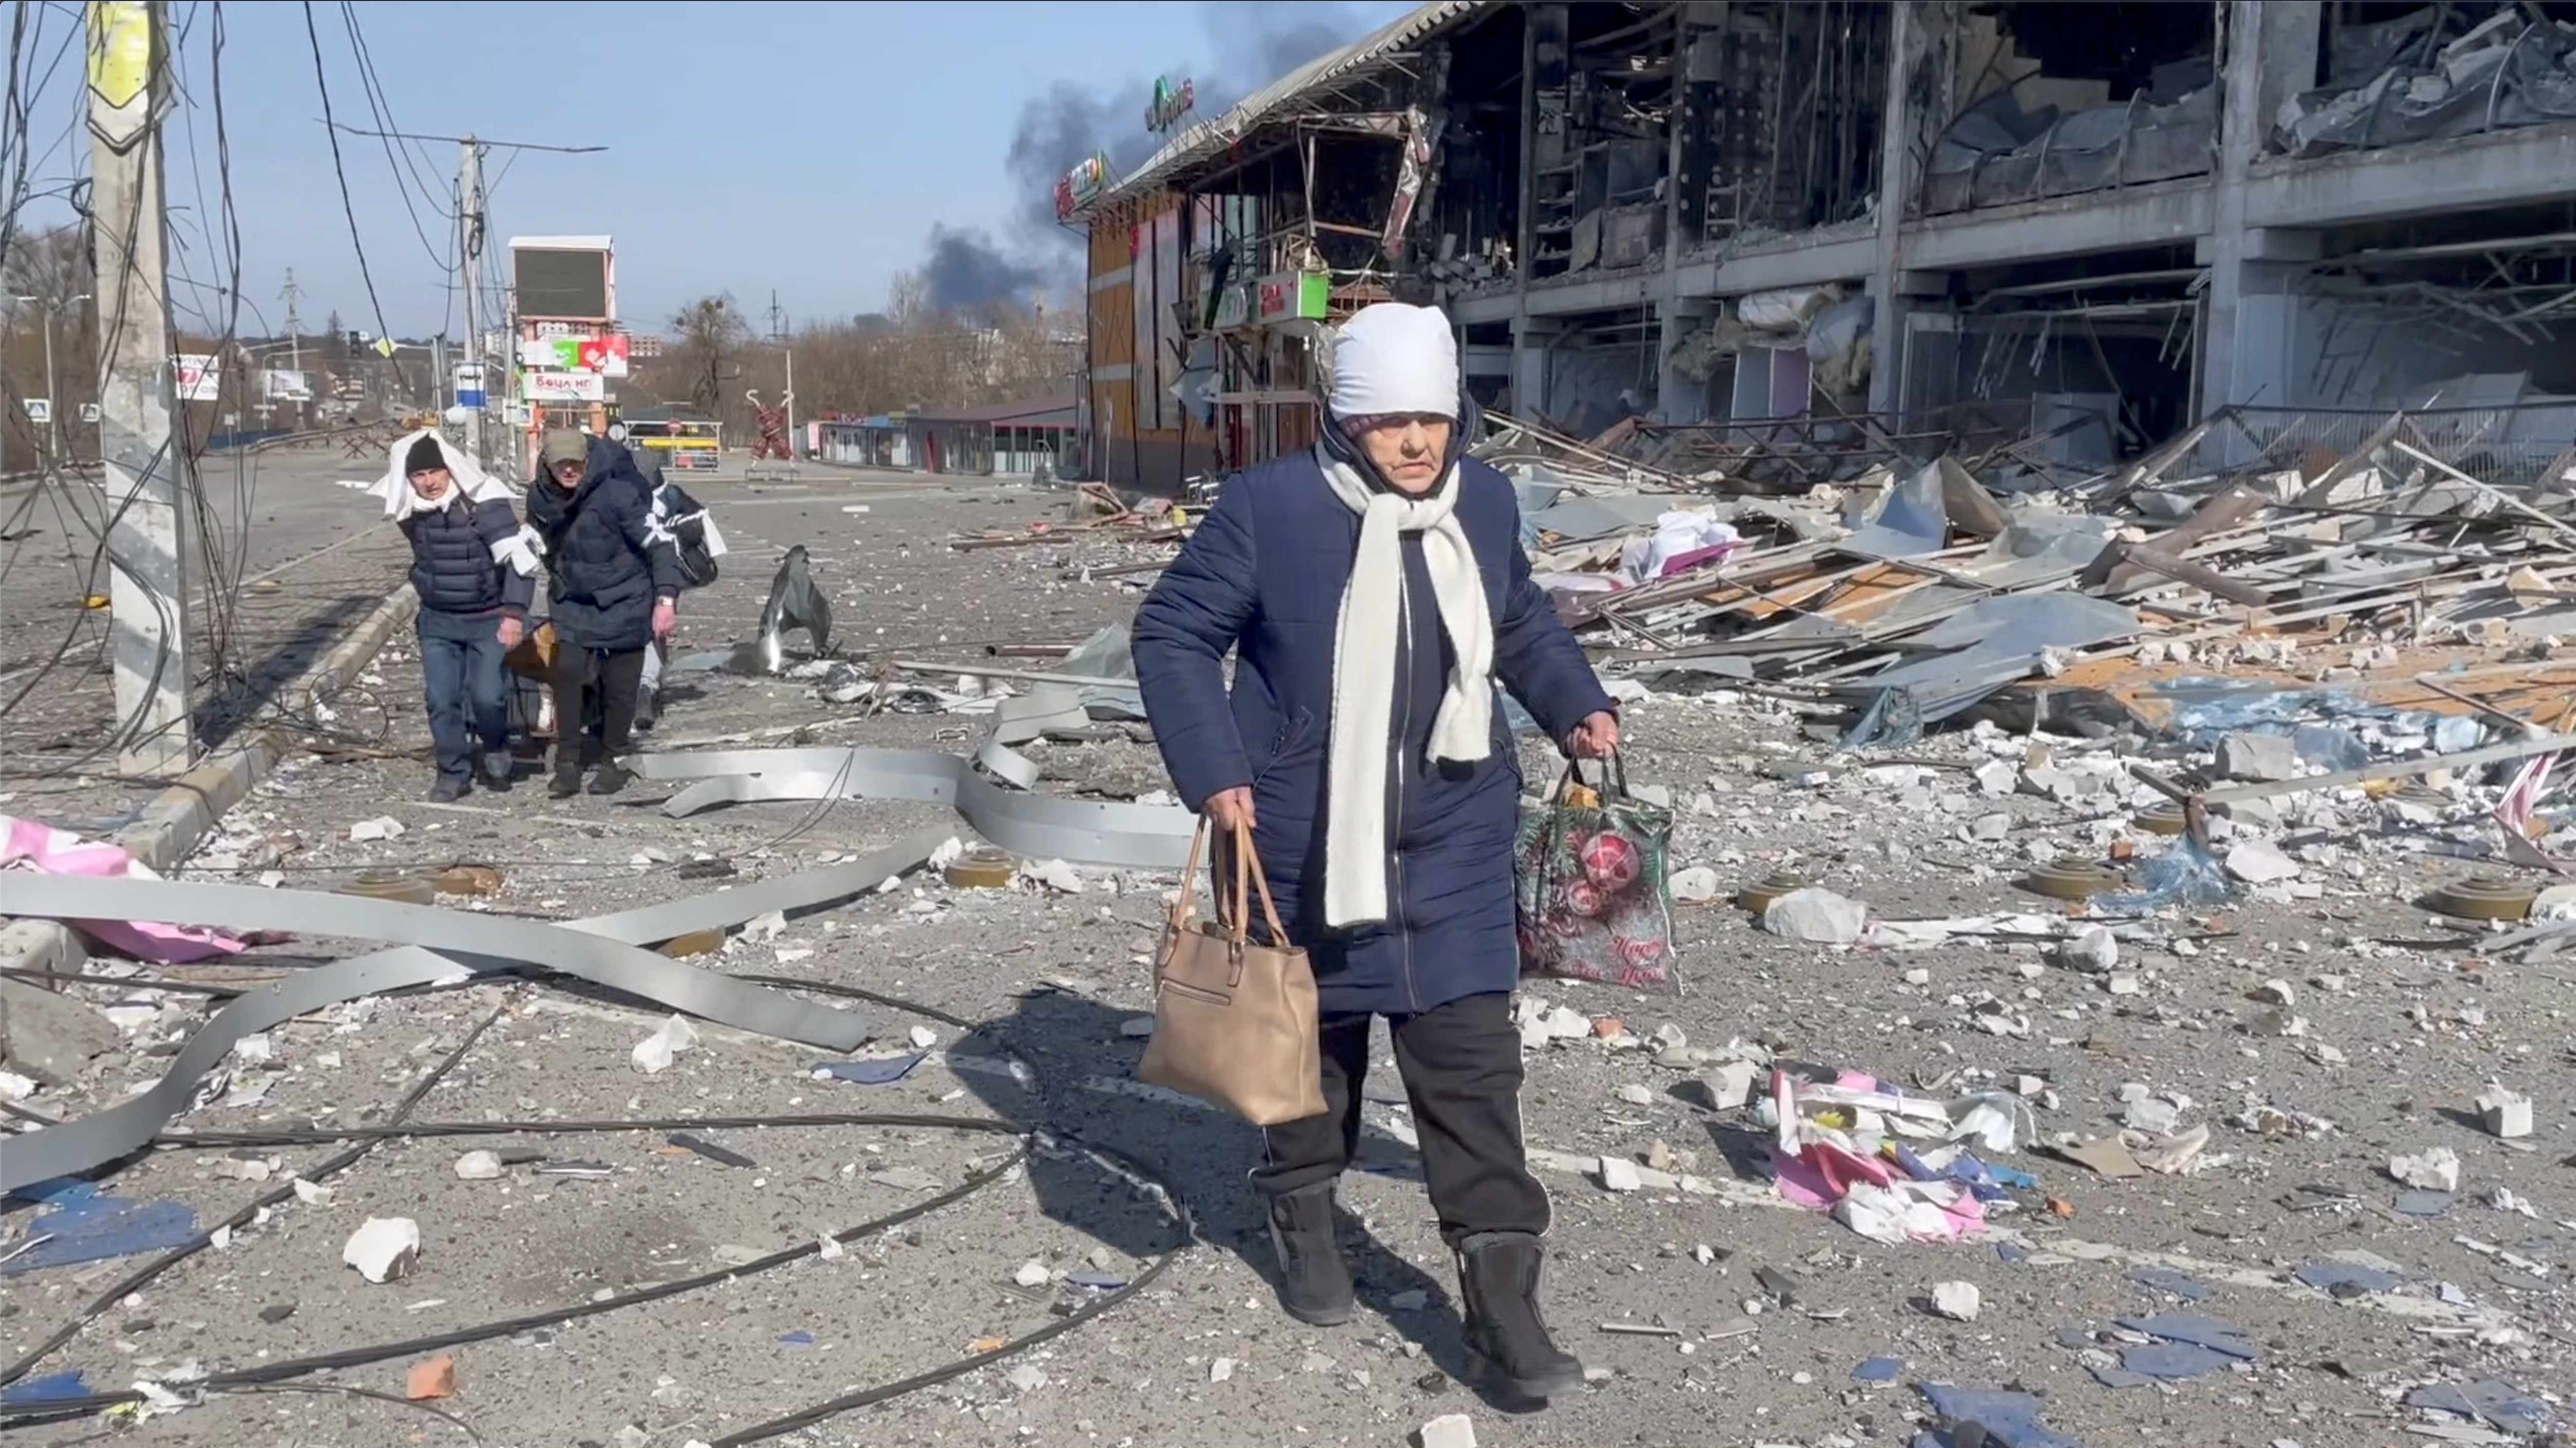 People flee the Russia's invasion of Ukraine, in Bucha